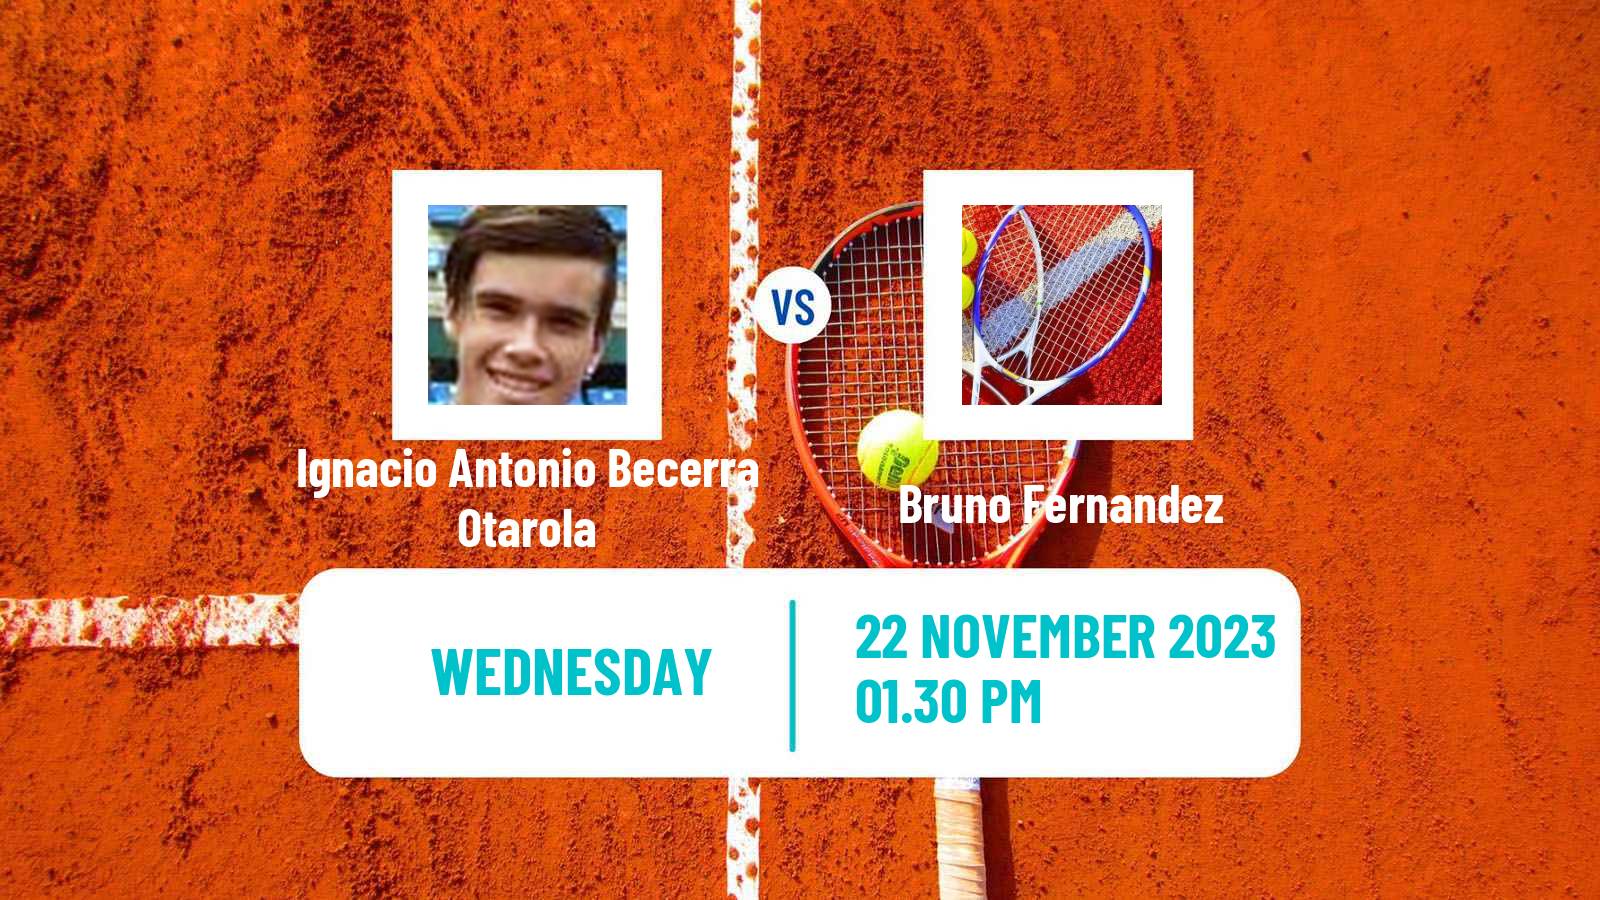 Tennis ITF M15 Santa Cruz Men Ignacio Antonio Becerra Otarola - Bruno Fernandez